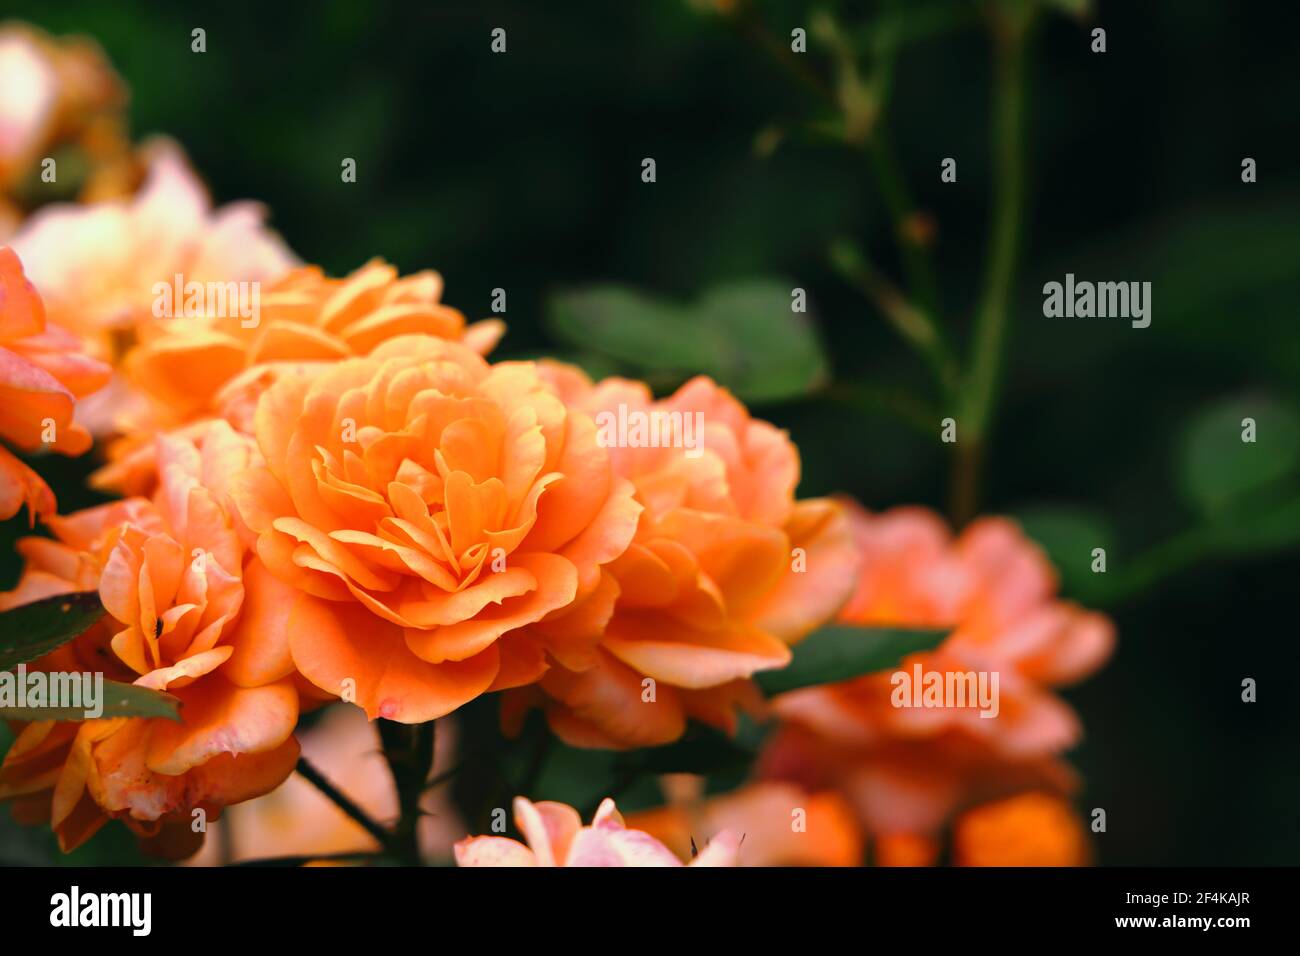 Apricot Clementine rose Stock Photo - Alamy